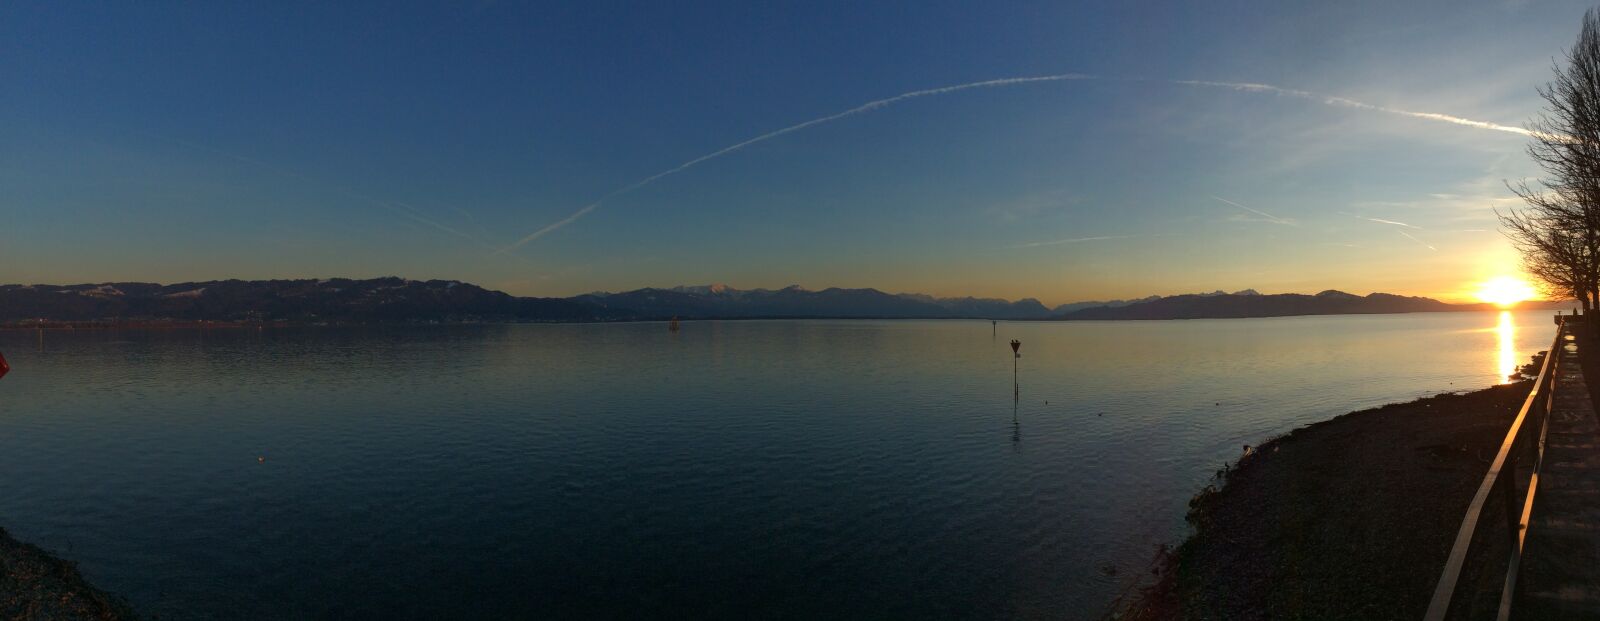 iPad Air back camera 3.3mm f/2.4 sample photo. Lake, landscape, airplane, sunset photography